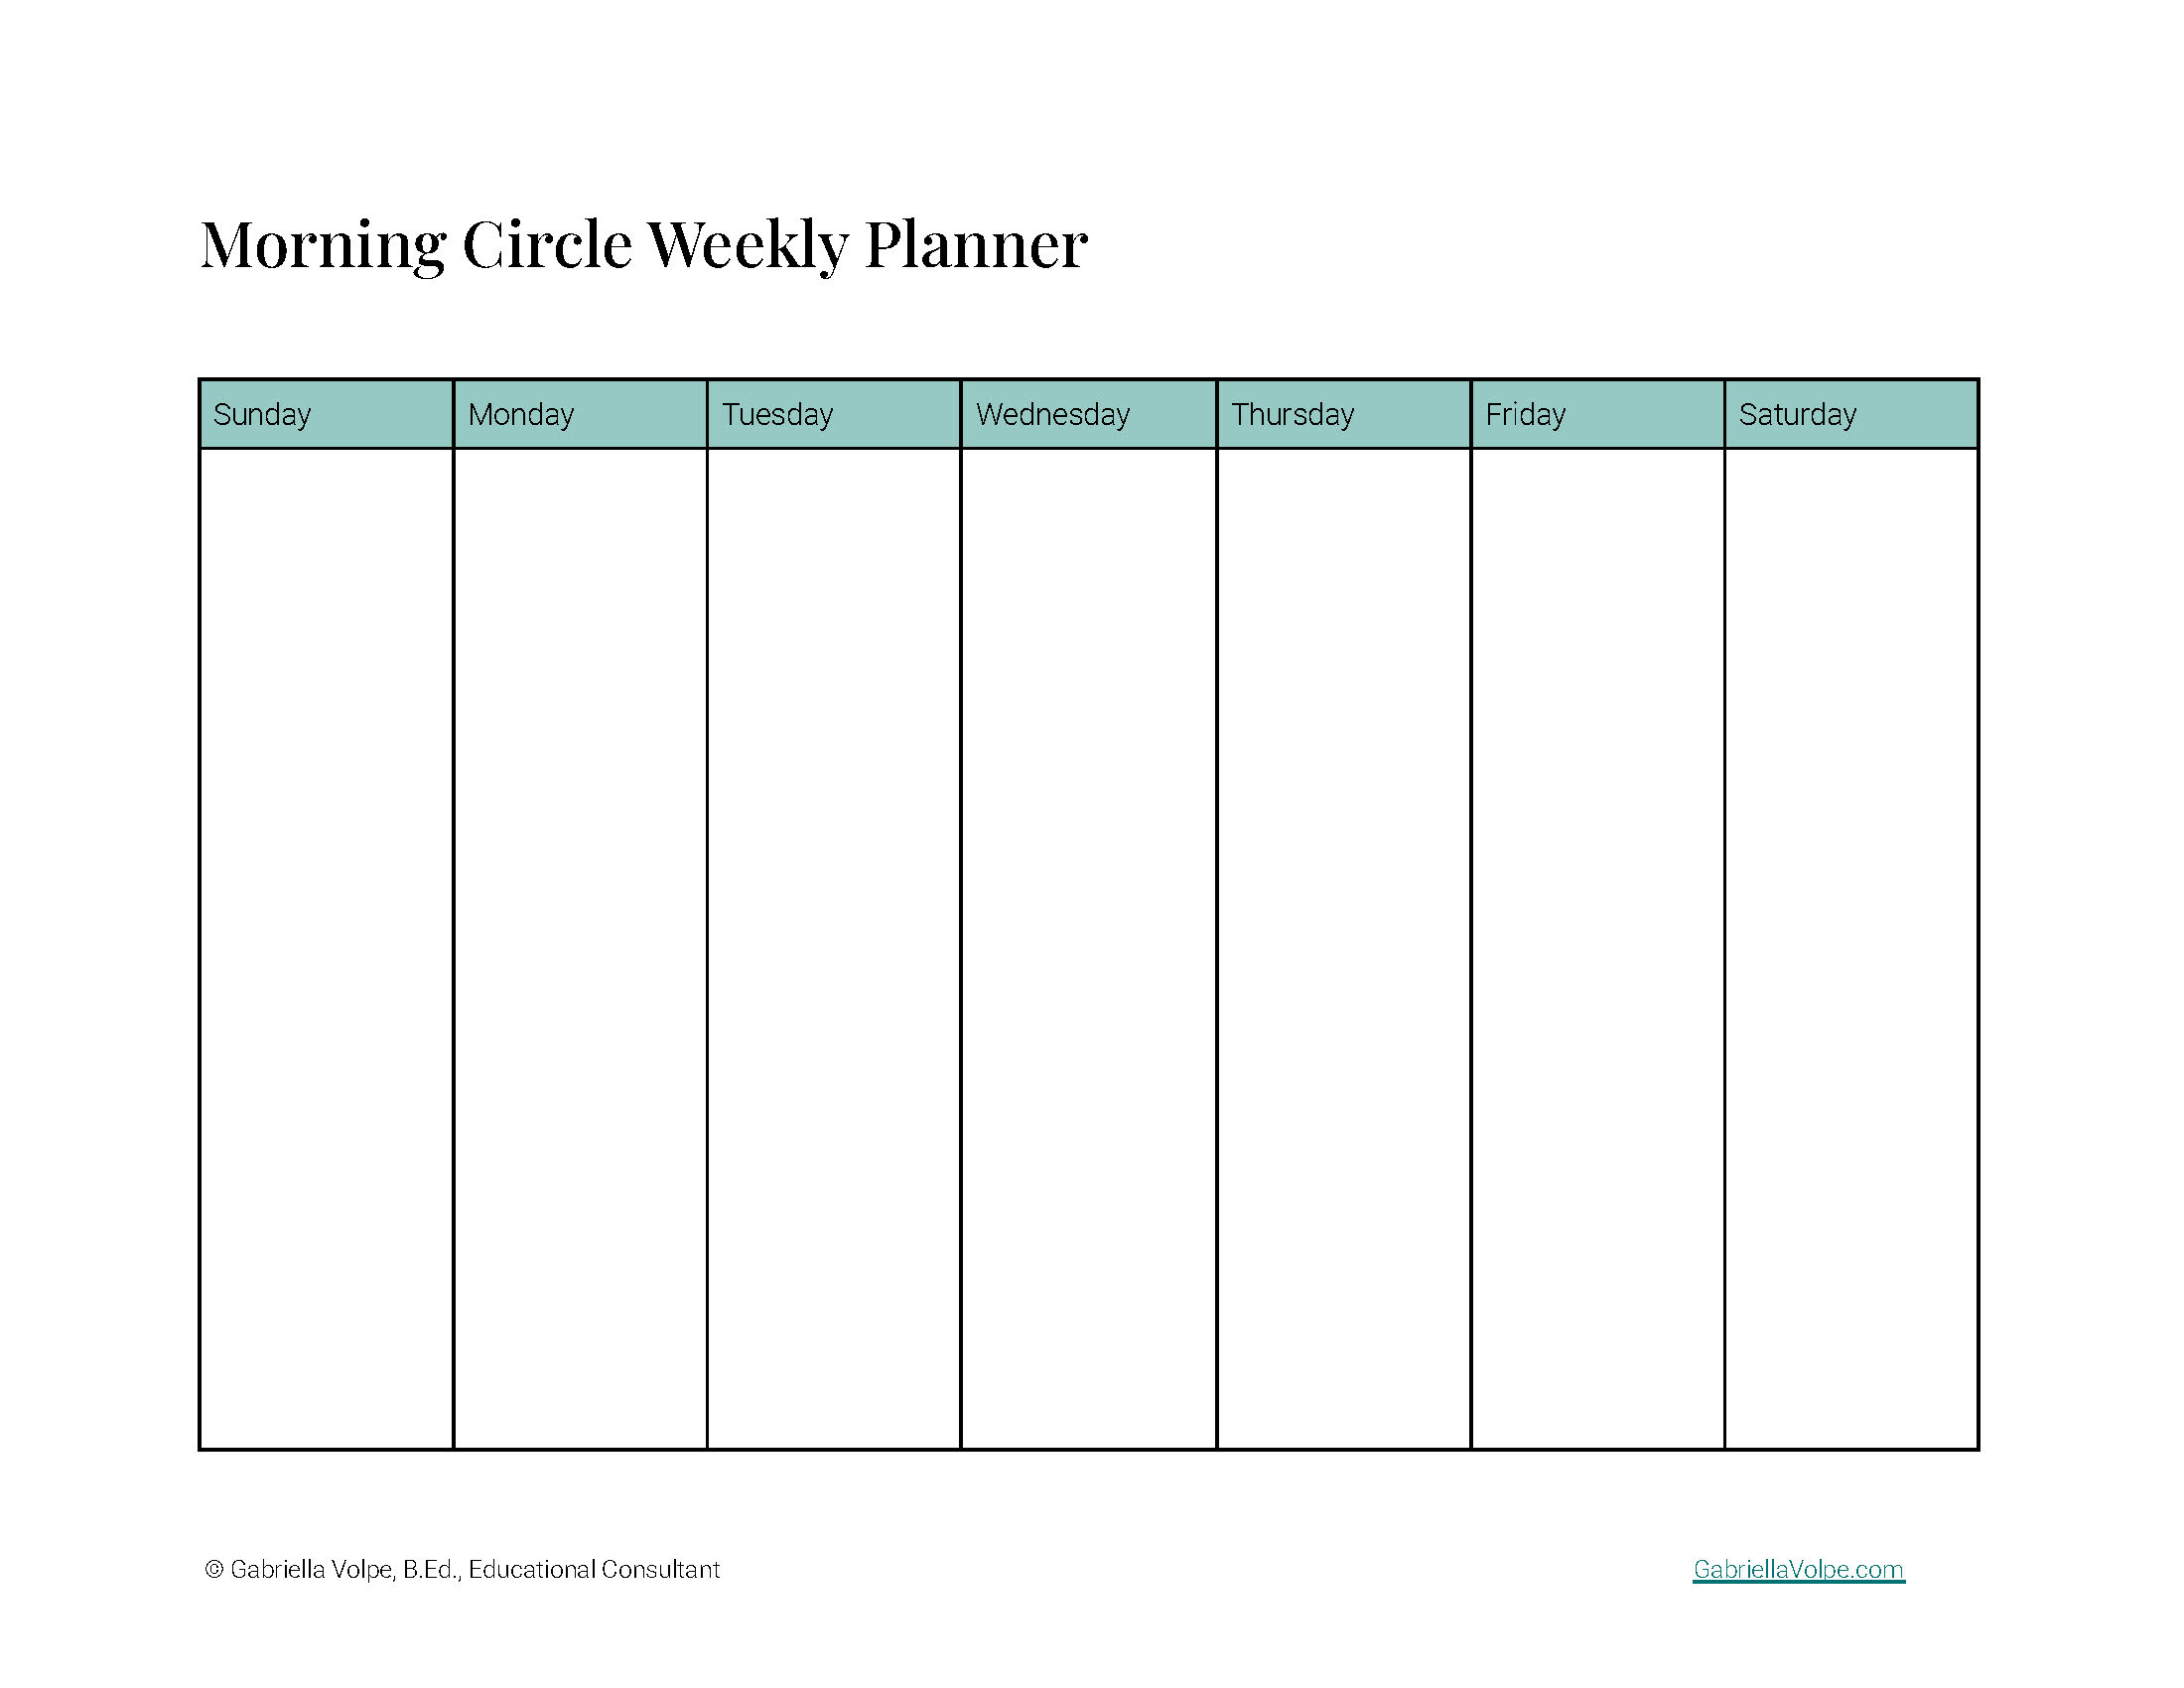 Weekly morning circle planner